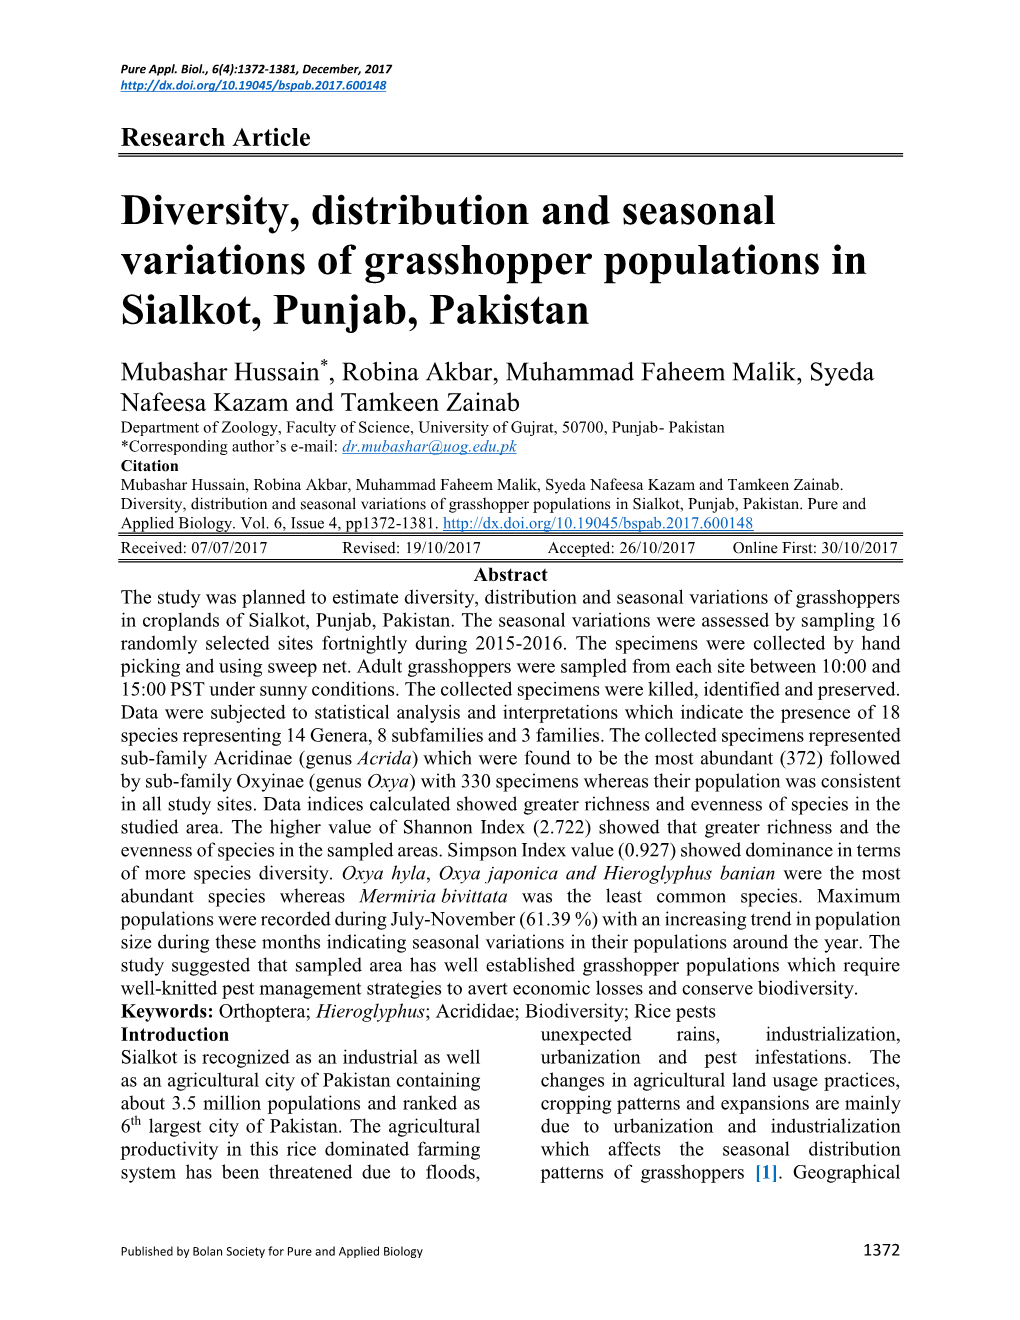 Diversity, Distribution and Seasonal Variations of Grasshopper Populations in Sialkot, Punjab, Pakistan